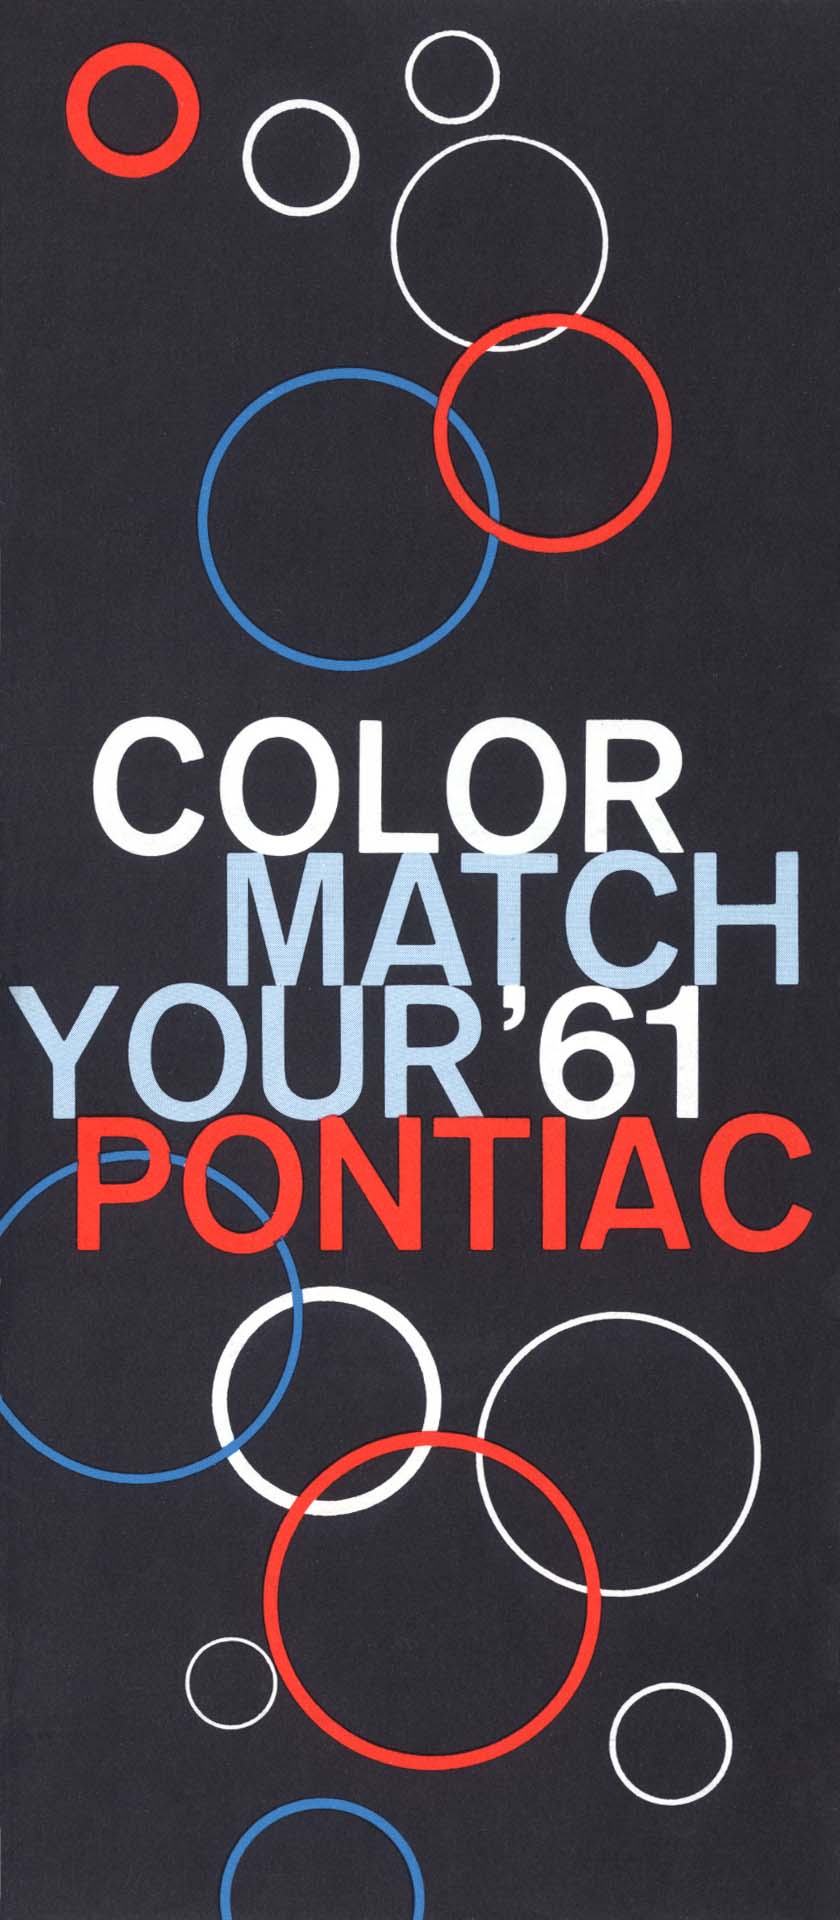 1961_Pontiac_Color_Chart-01